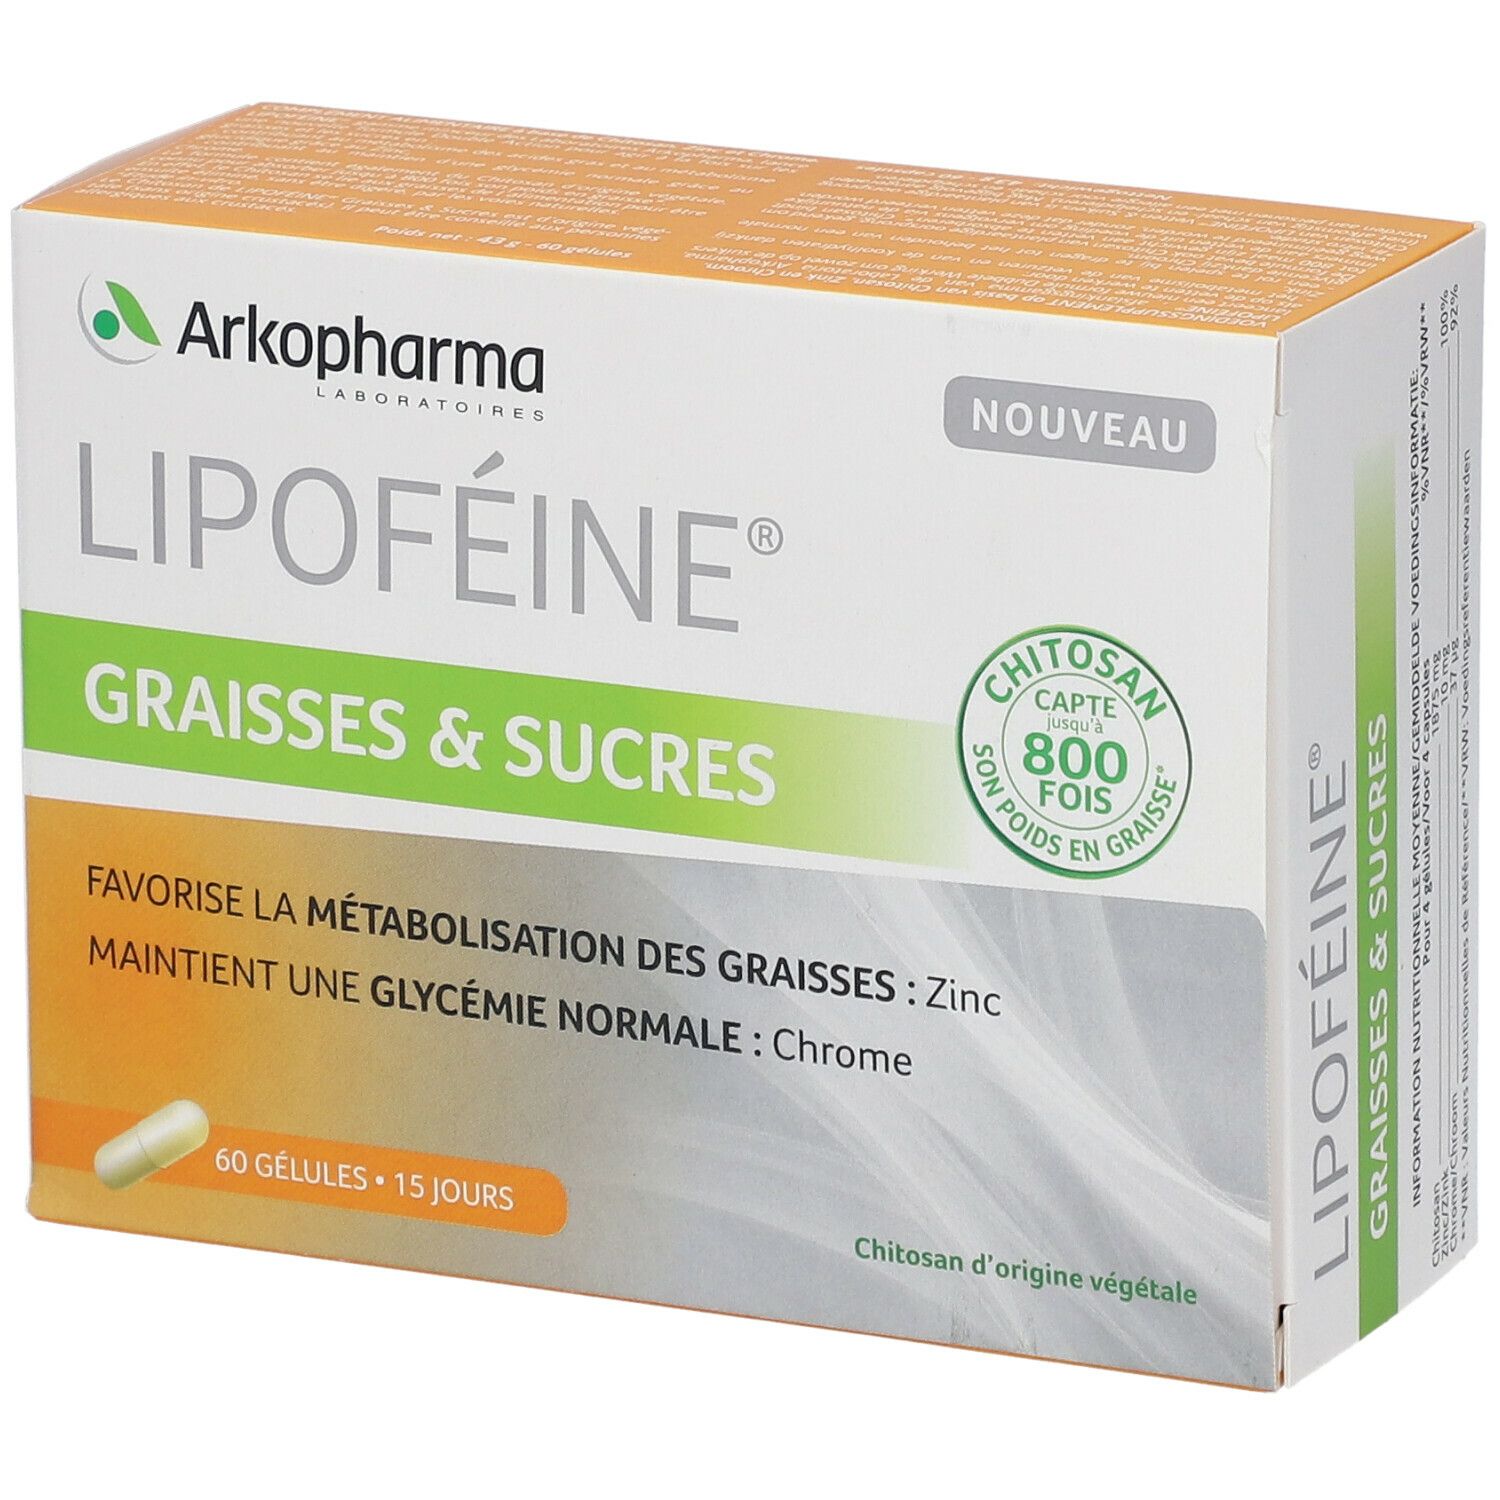 Arkopharma LIPOFÉINE® Graisses & Sucres